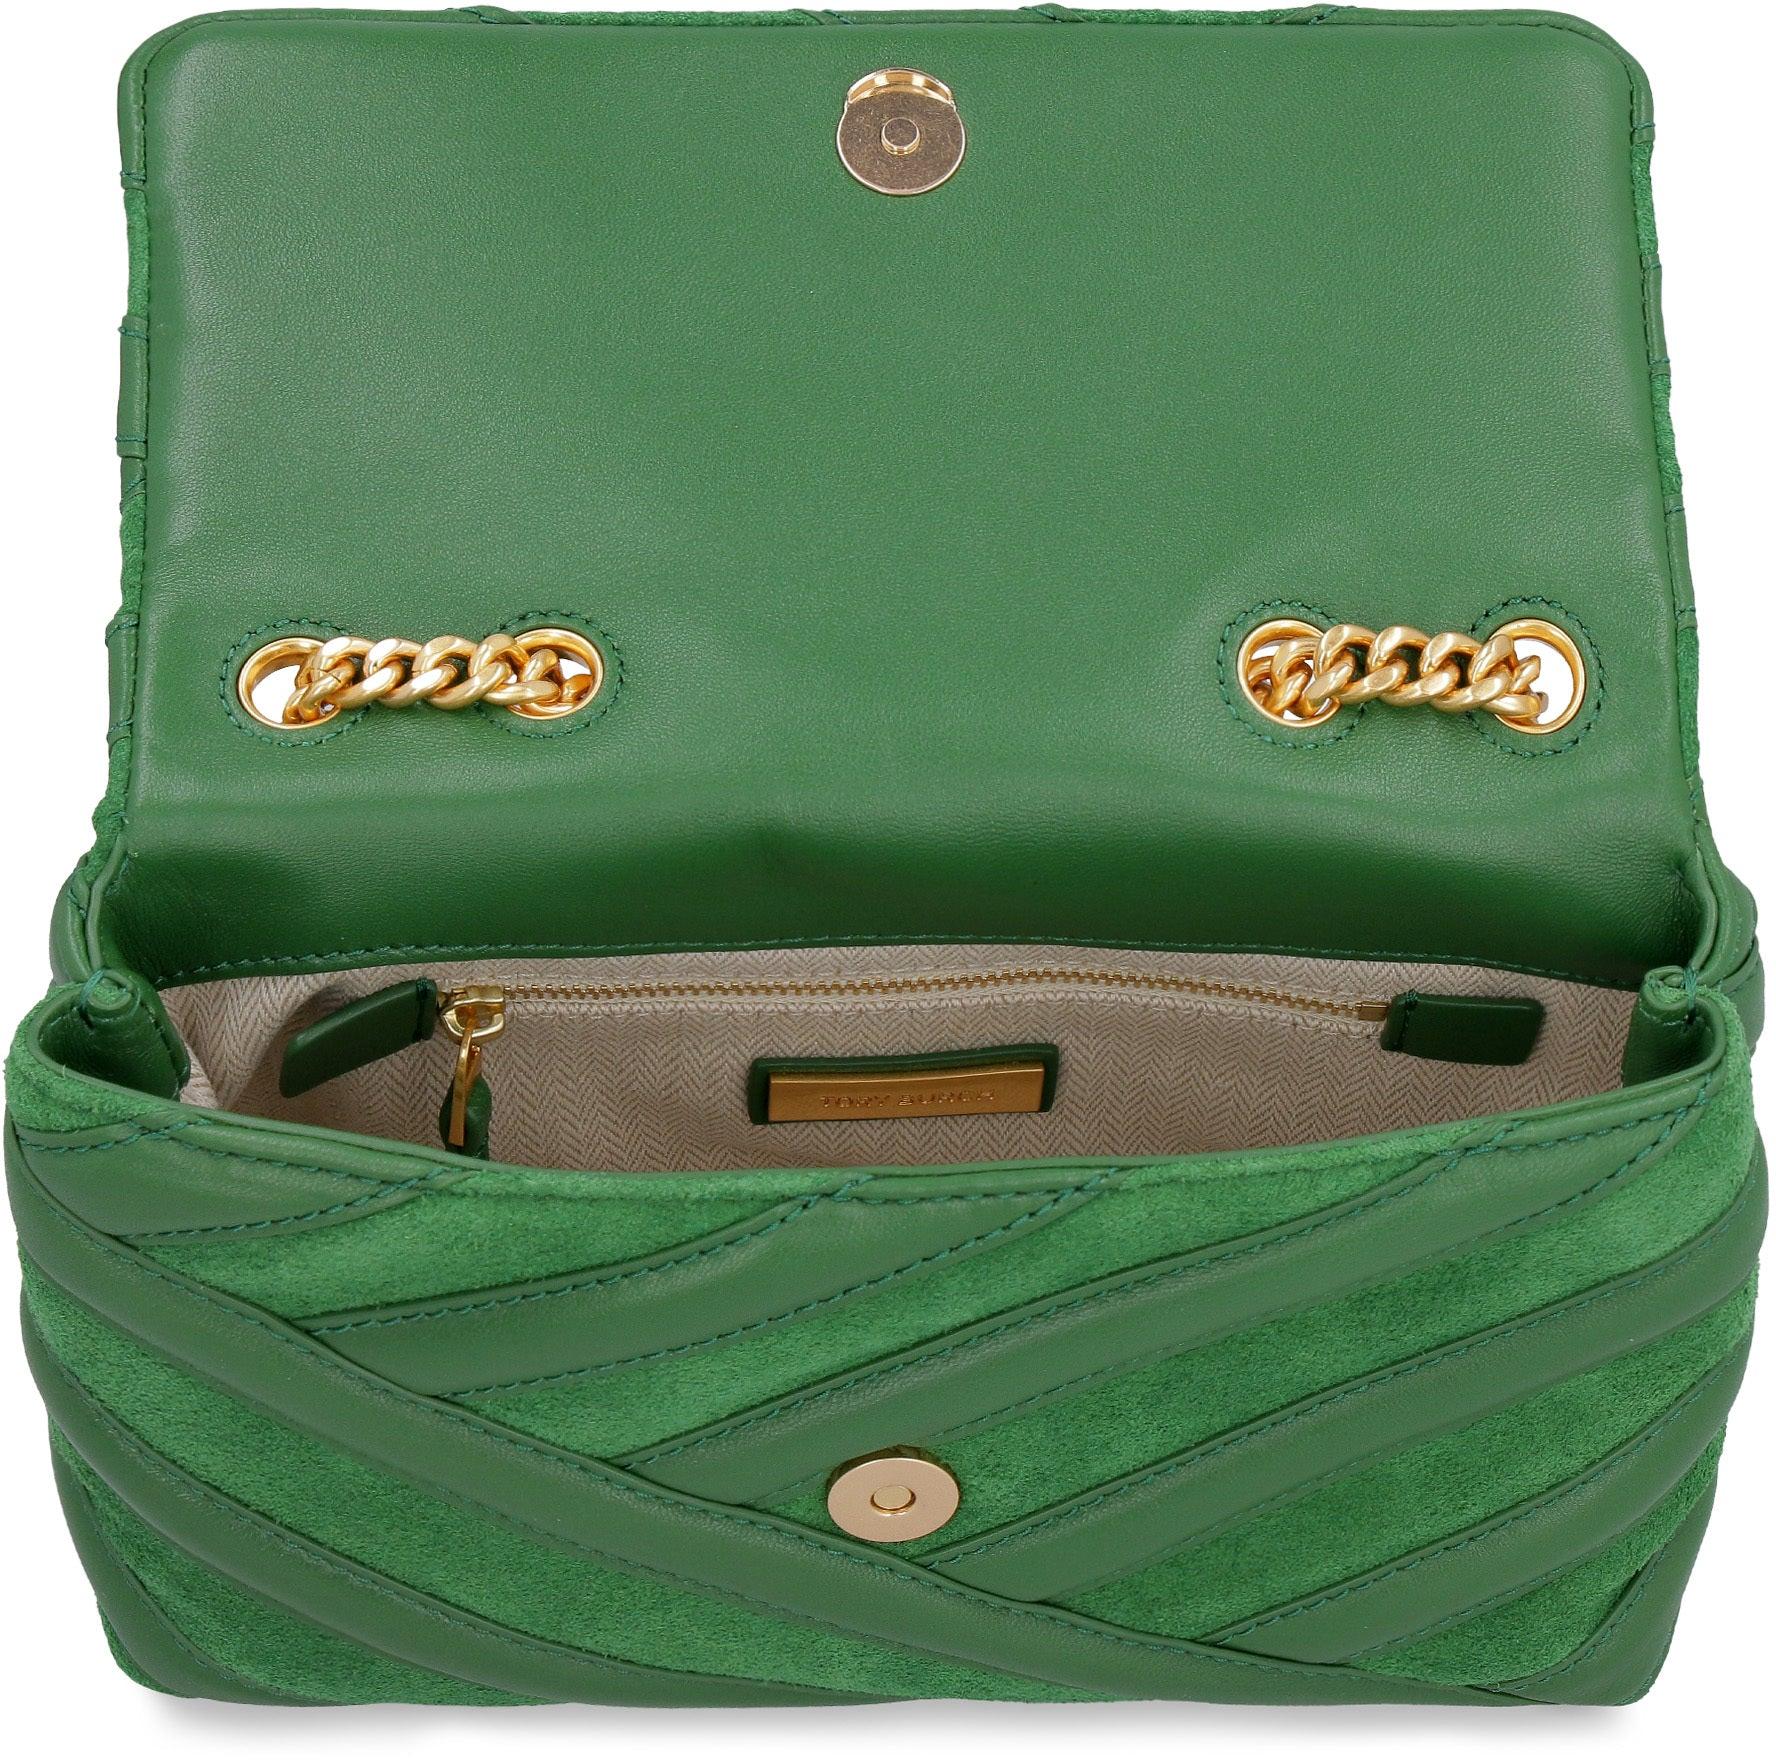 Cross body bags Tory Burch - Small Kira bag in green suede - 139631325